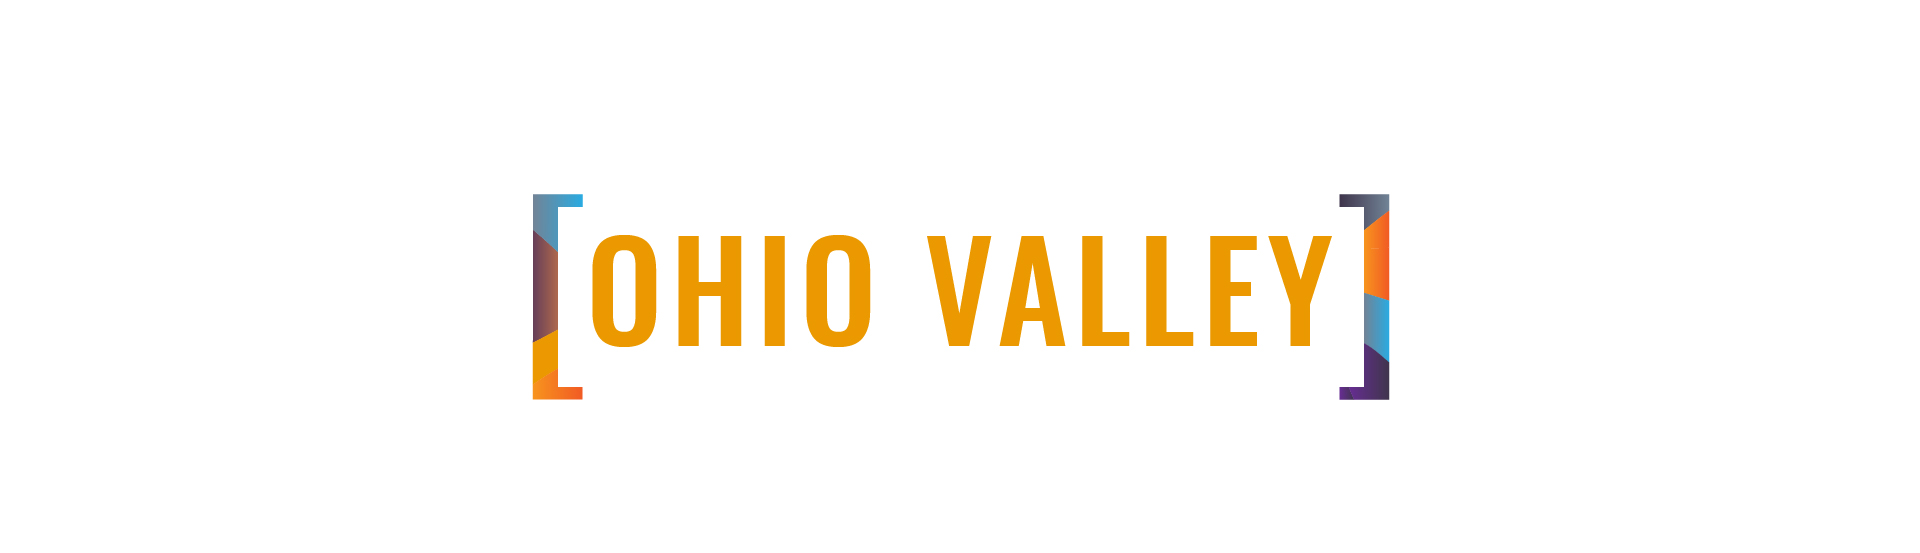 CMG Regional Ohio Valley